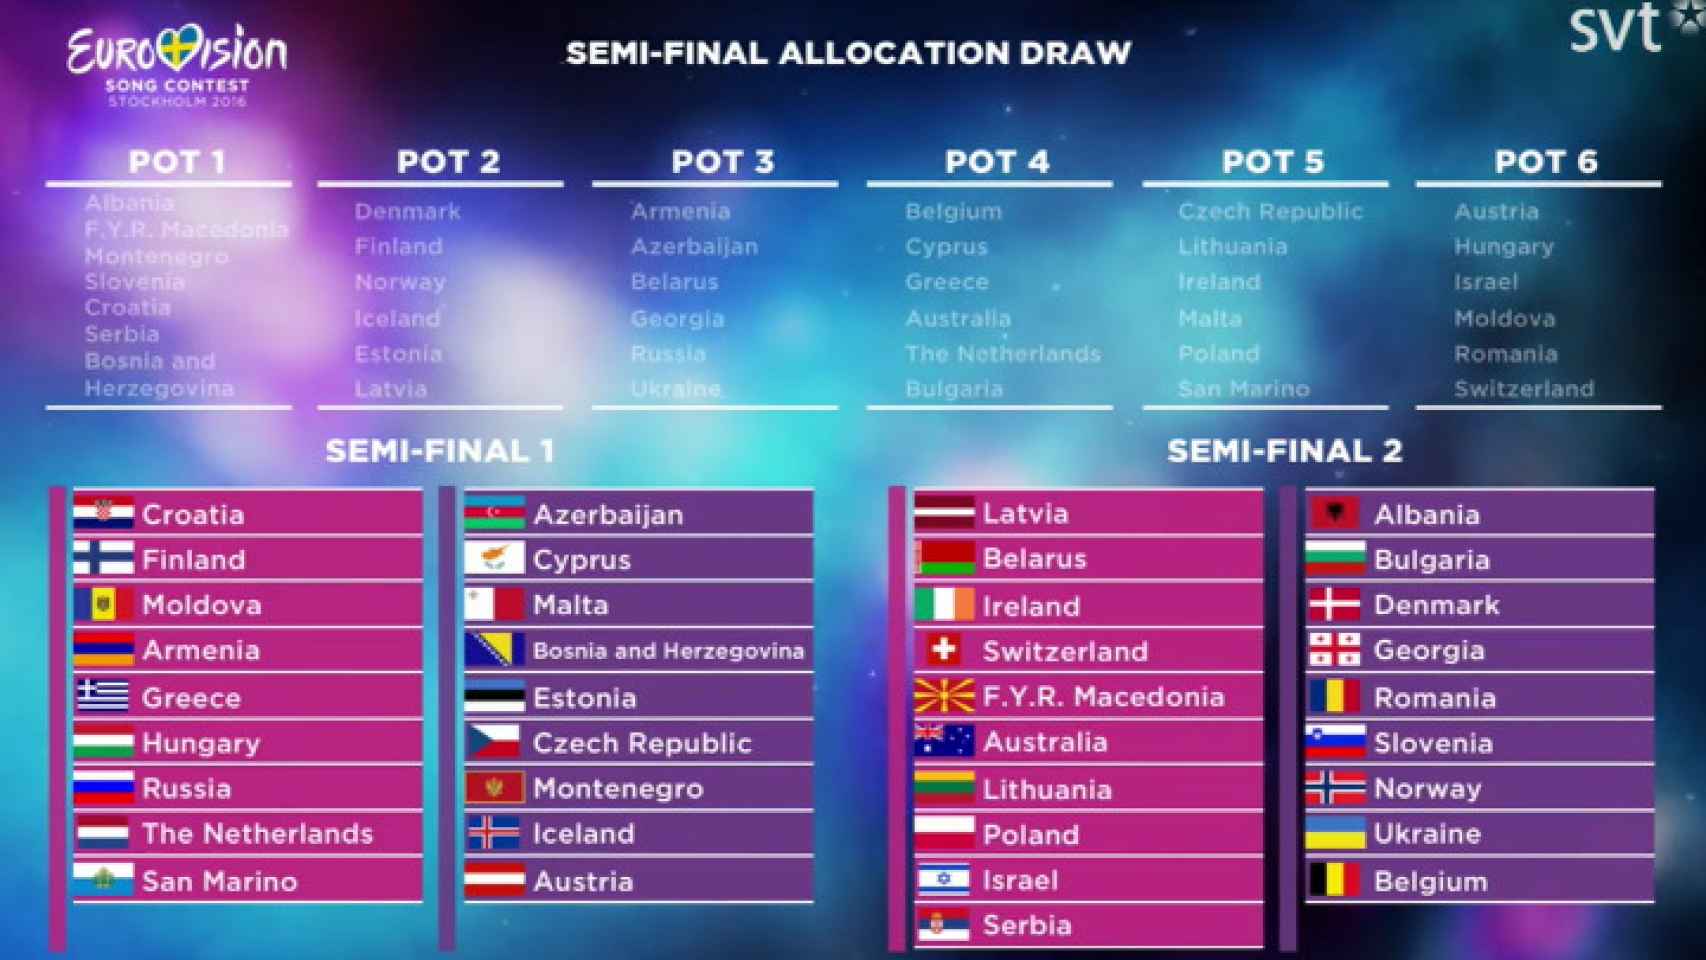 España votará en la primera semifinal de Eurovisión 2016